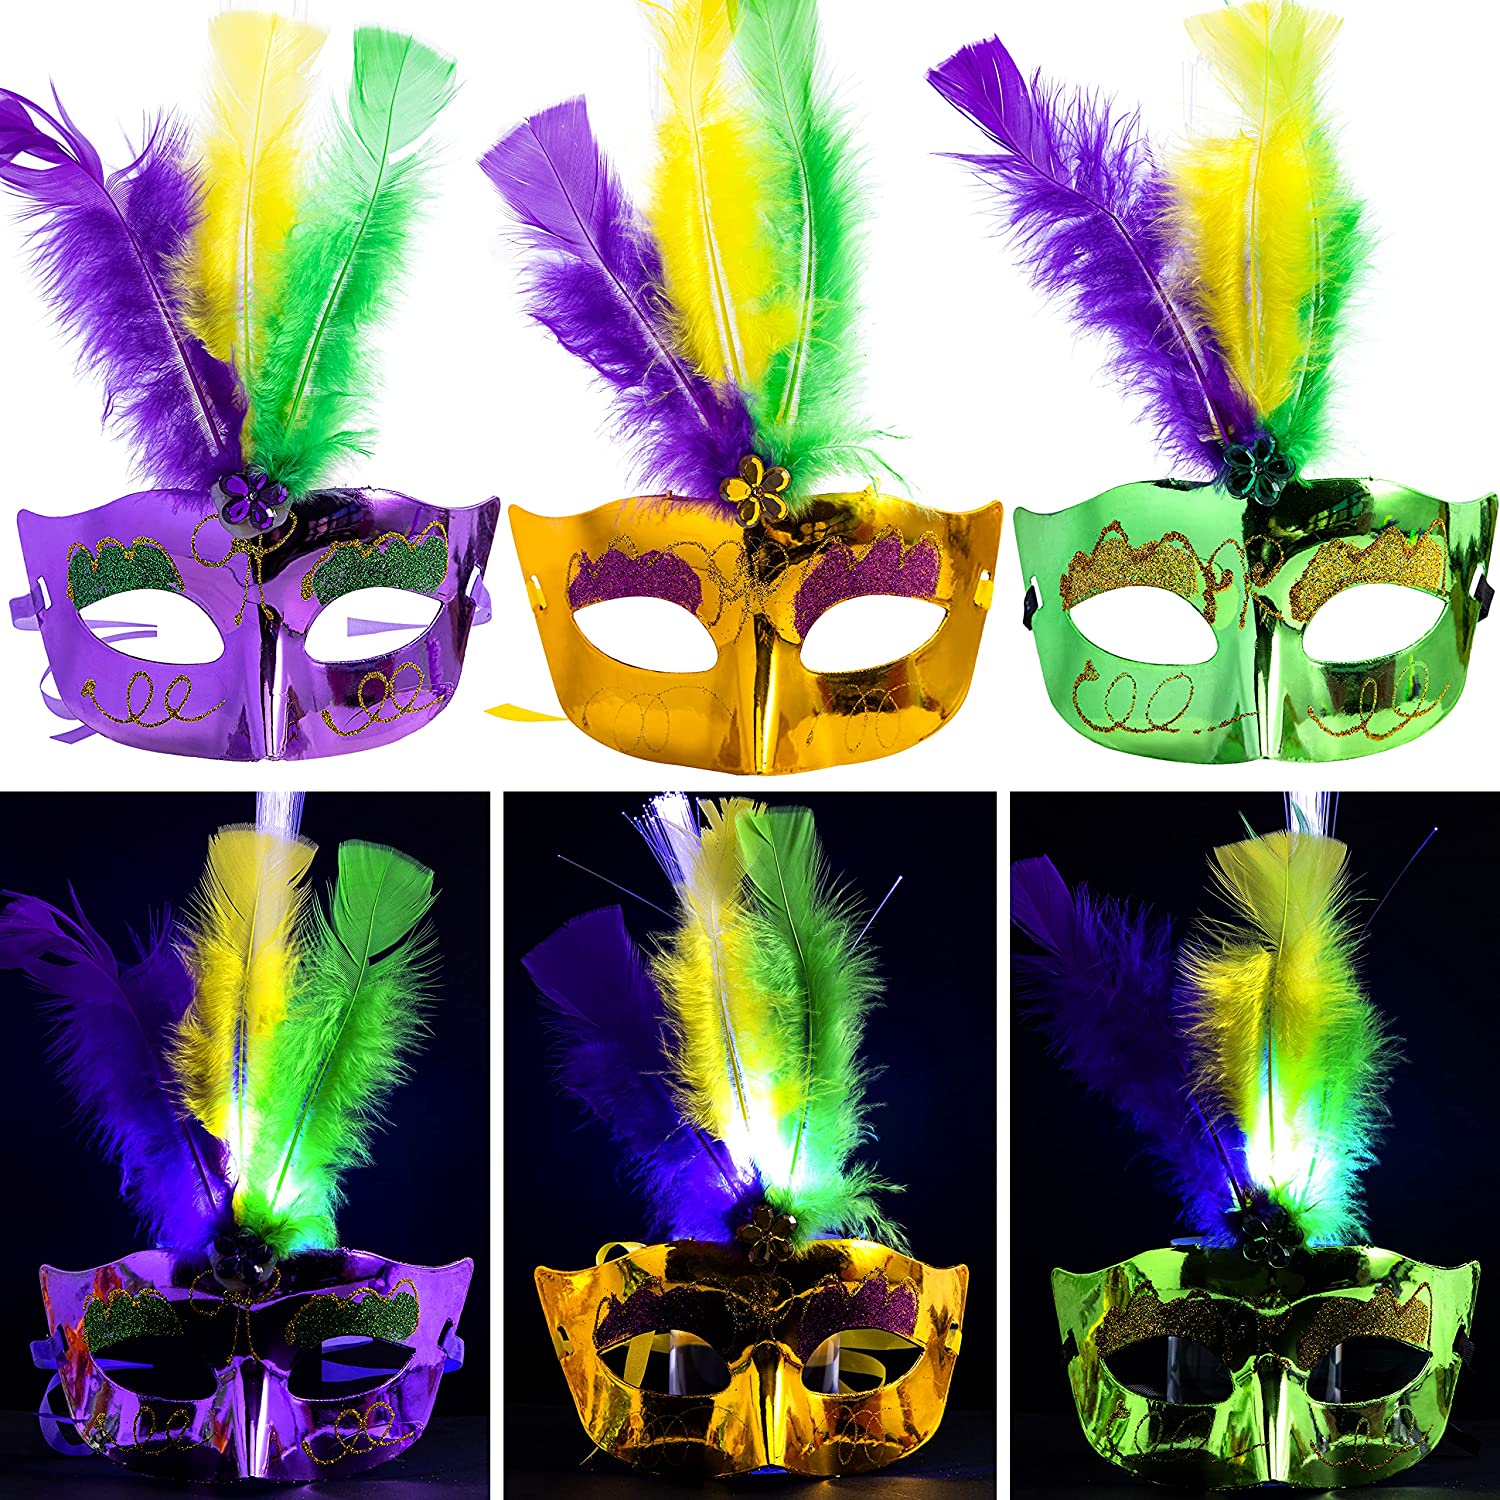 Mardi Gras Mask Carnival Masquerade Mask, 72 Inch Mardi Gras Feather Boa,  33 Inch 7 mm Metallic Purple Yellow Green Bead Necklace, Mardi Gras